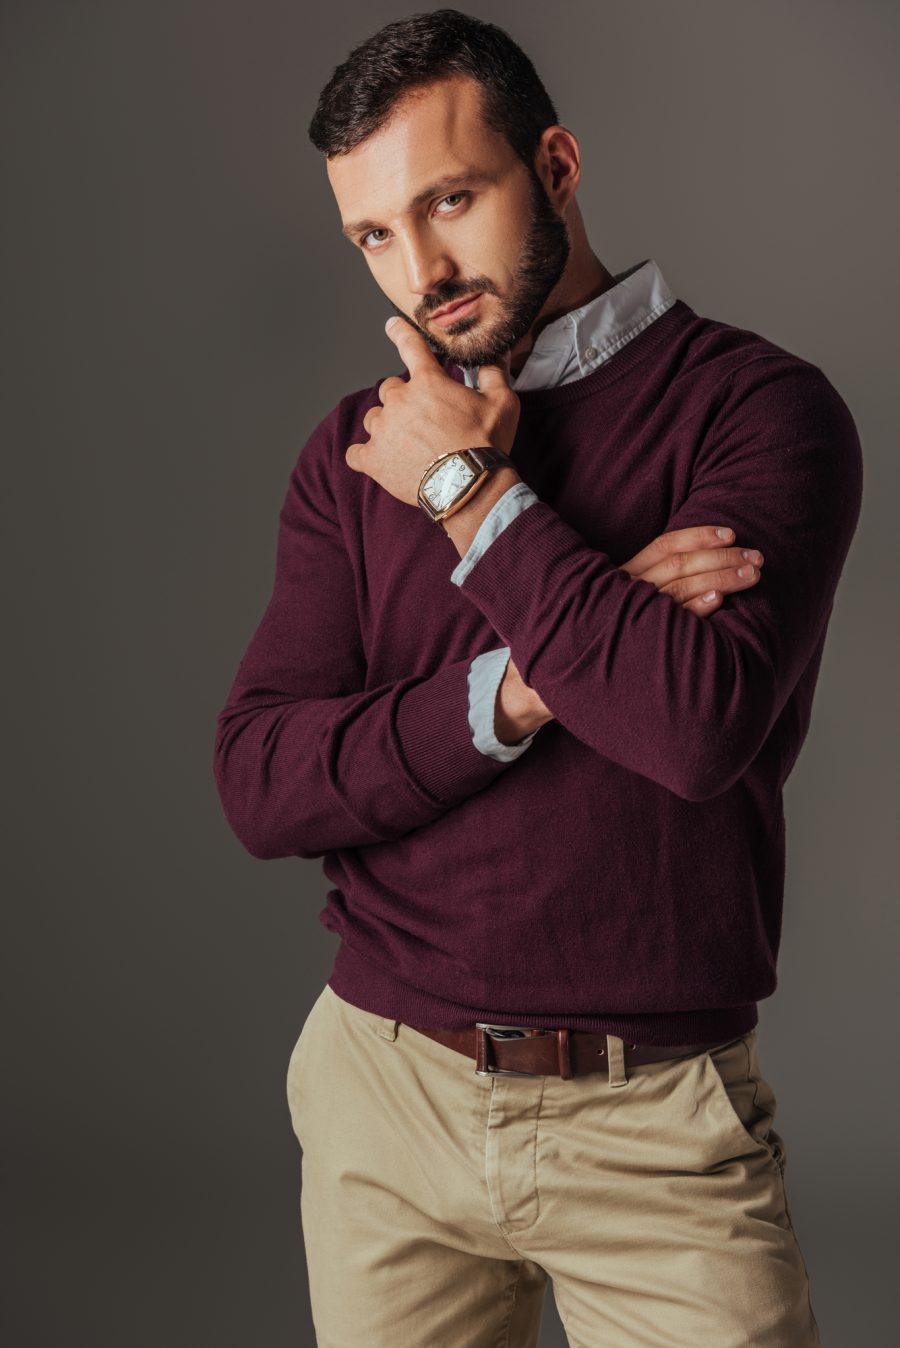 Man Burgundy Sweater Wearing Watch